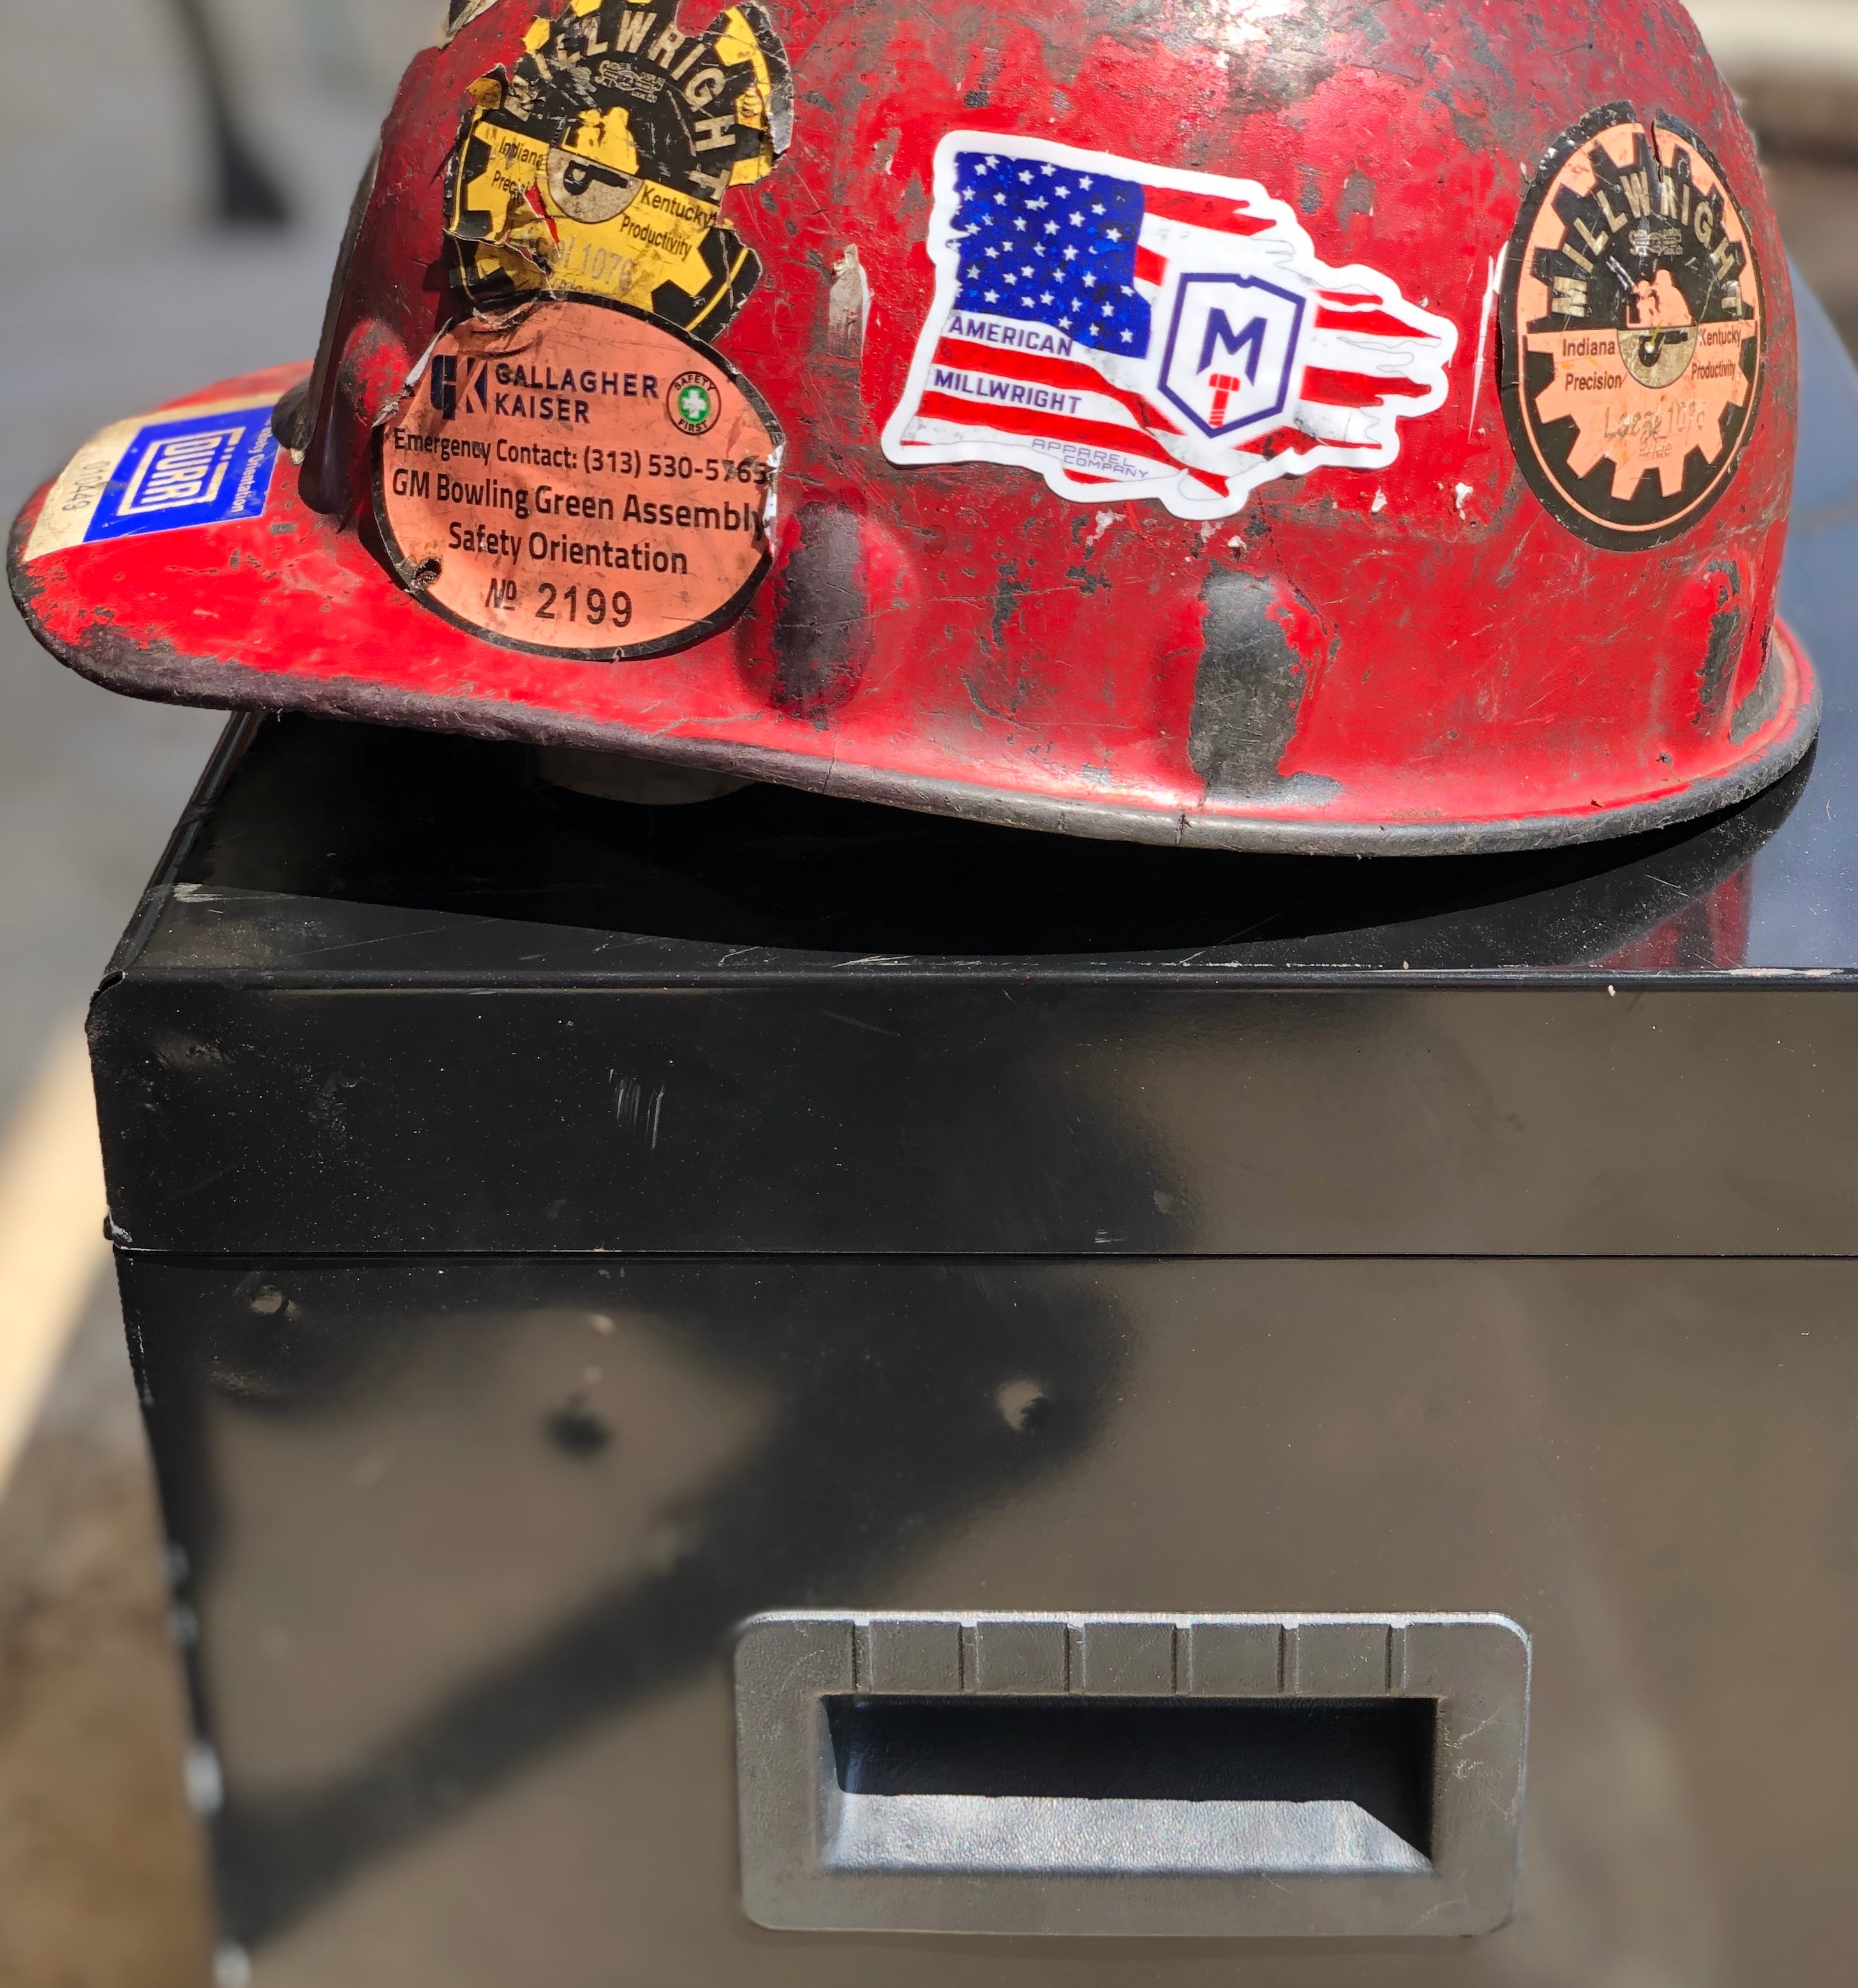 American Millwright Company Hard hat stickers